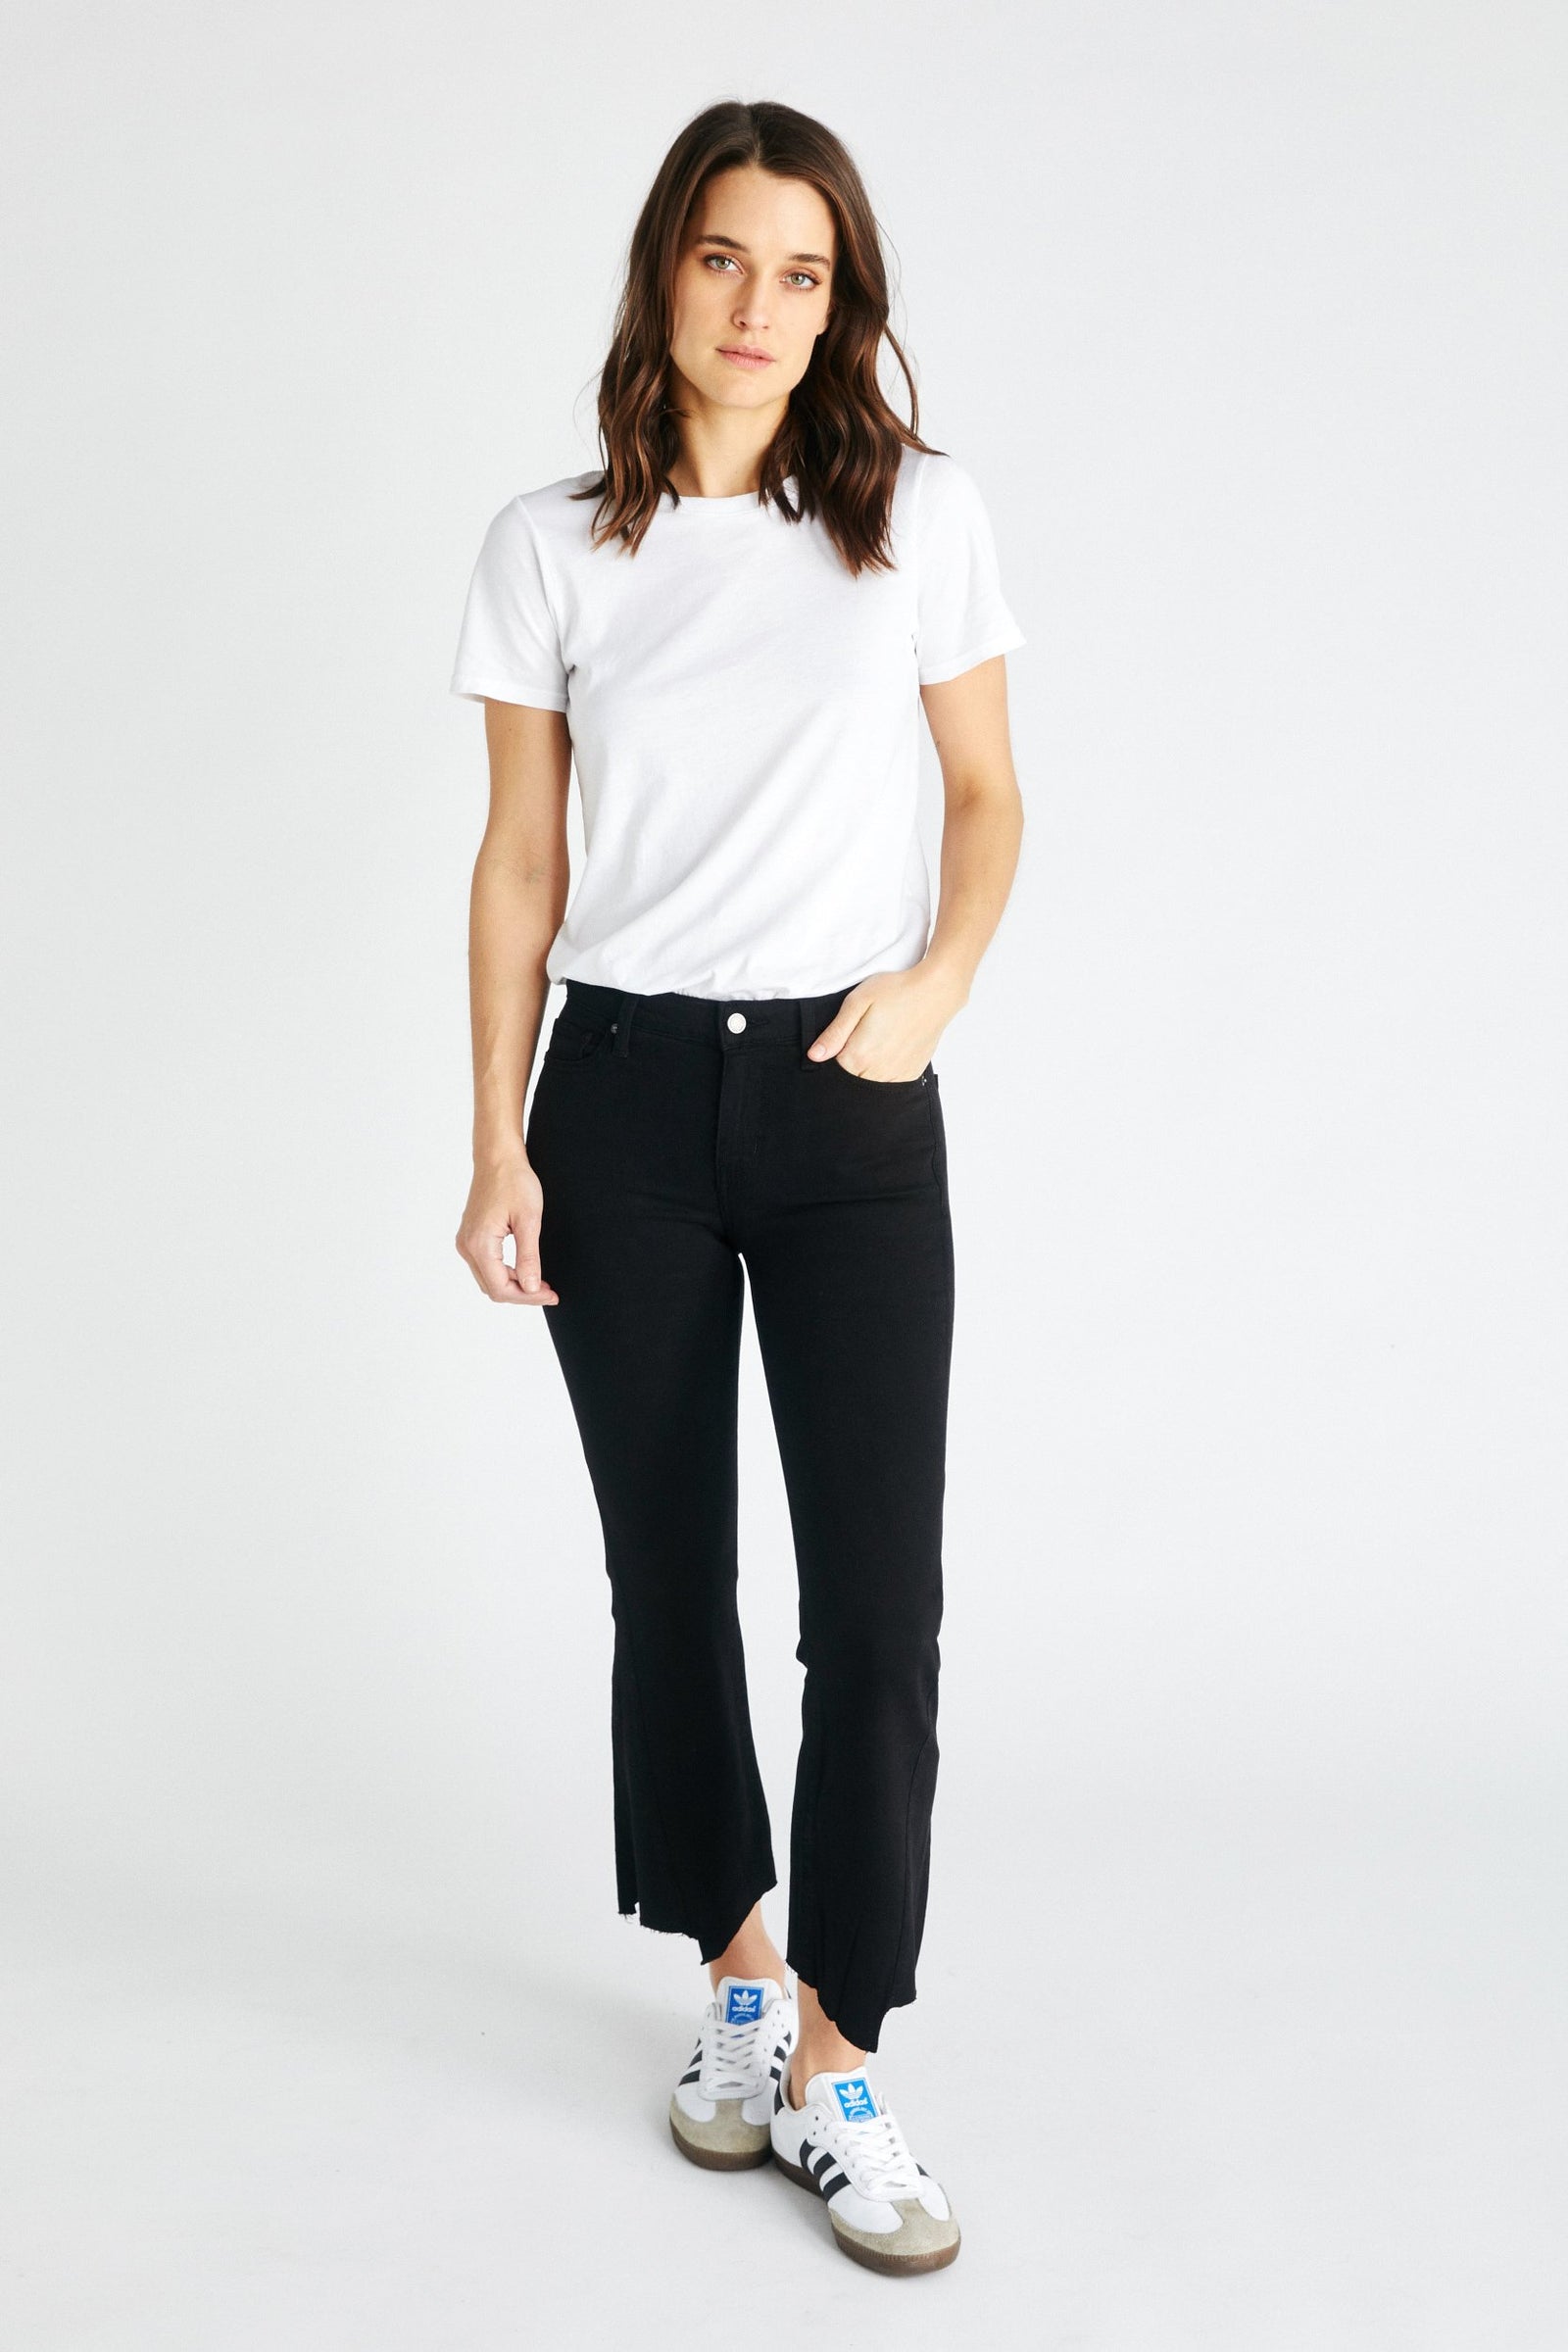 French Dressing Jeans Love Denim Pull-On Slim Jegging (Indigo, Black, Denim)